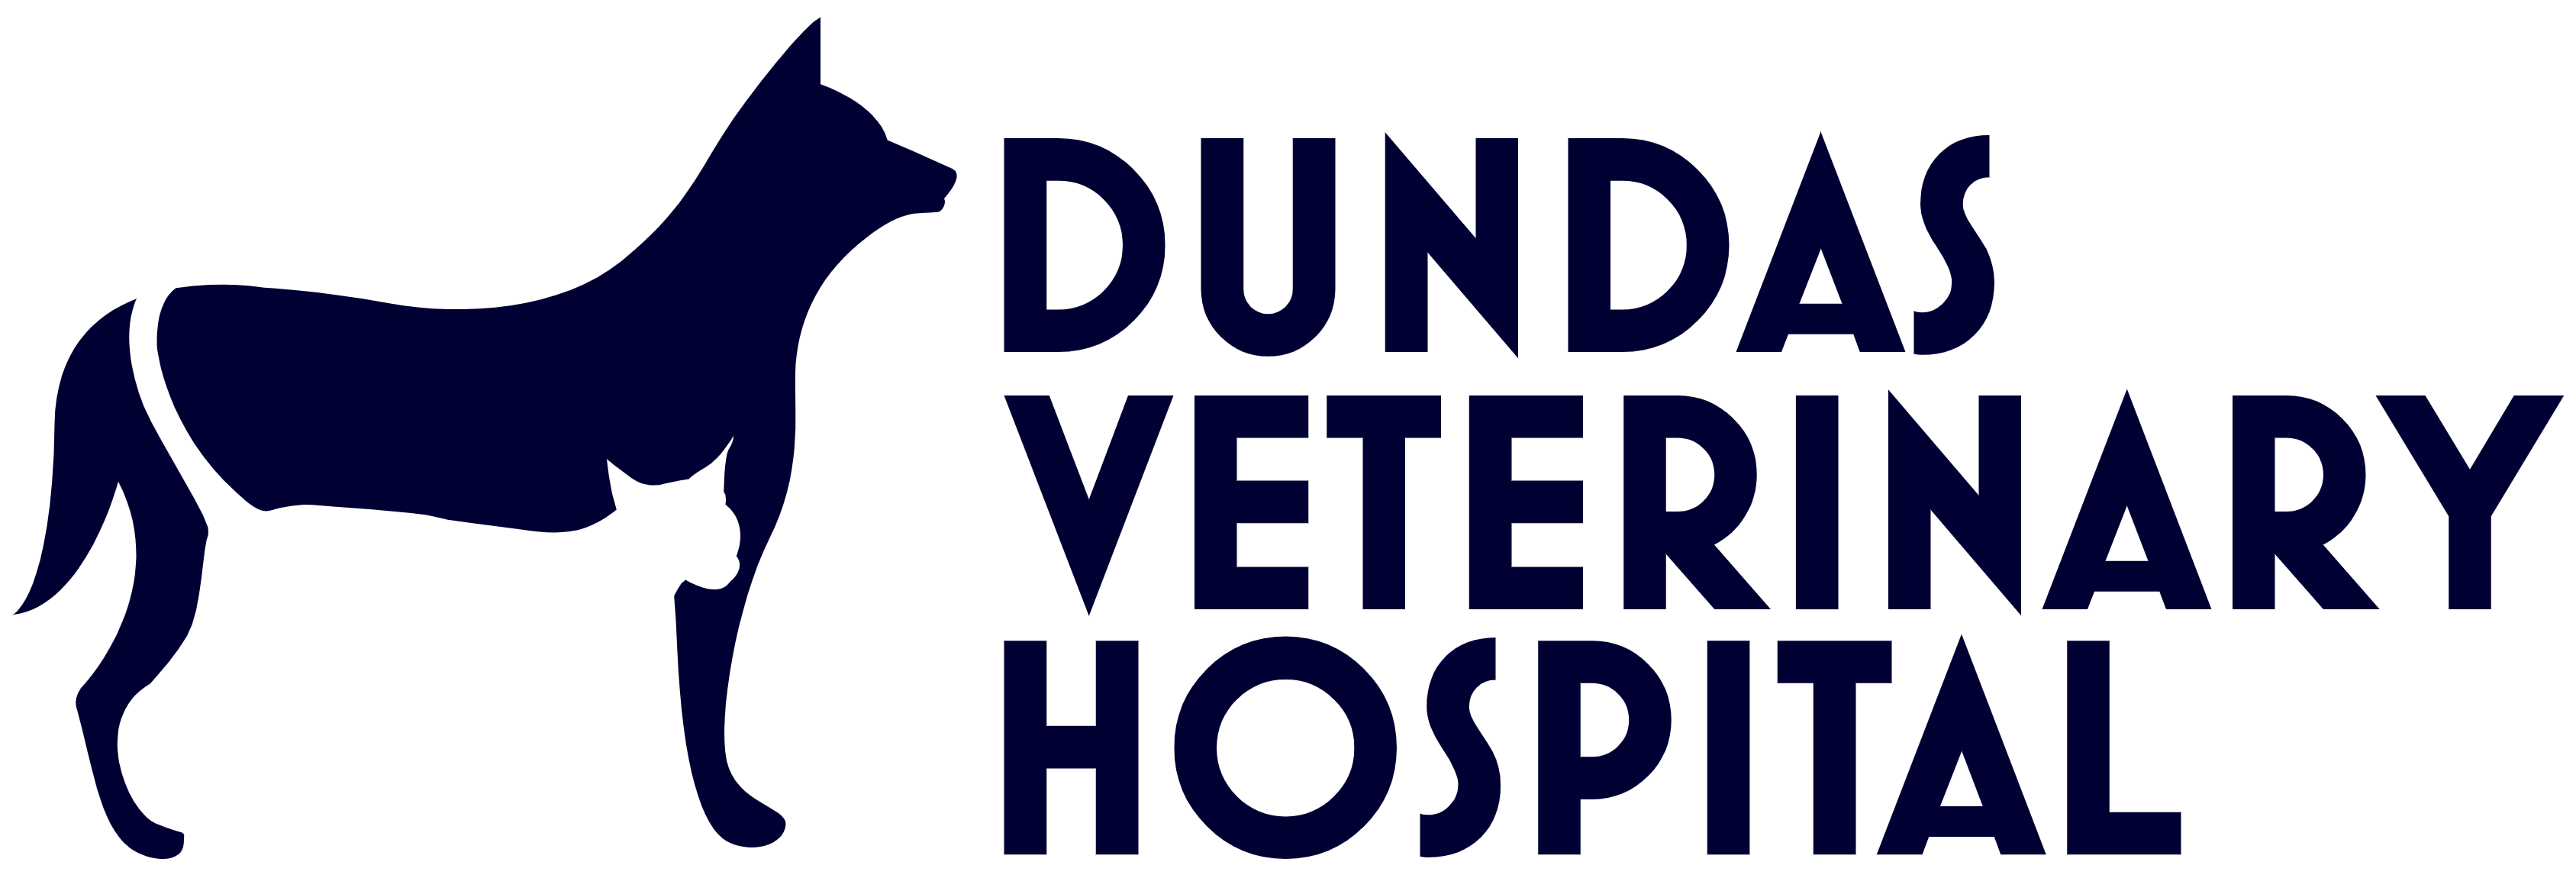 Dundas Veterinary Hospital